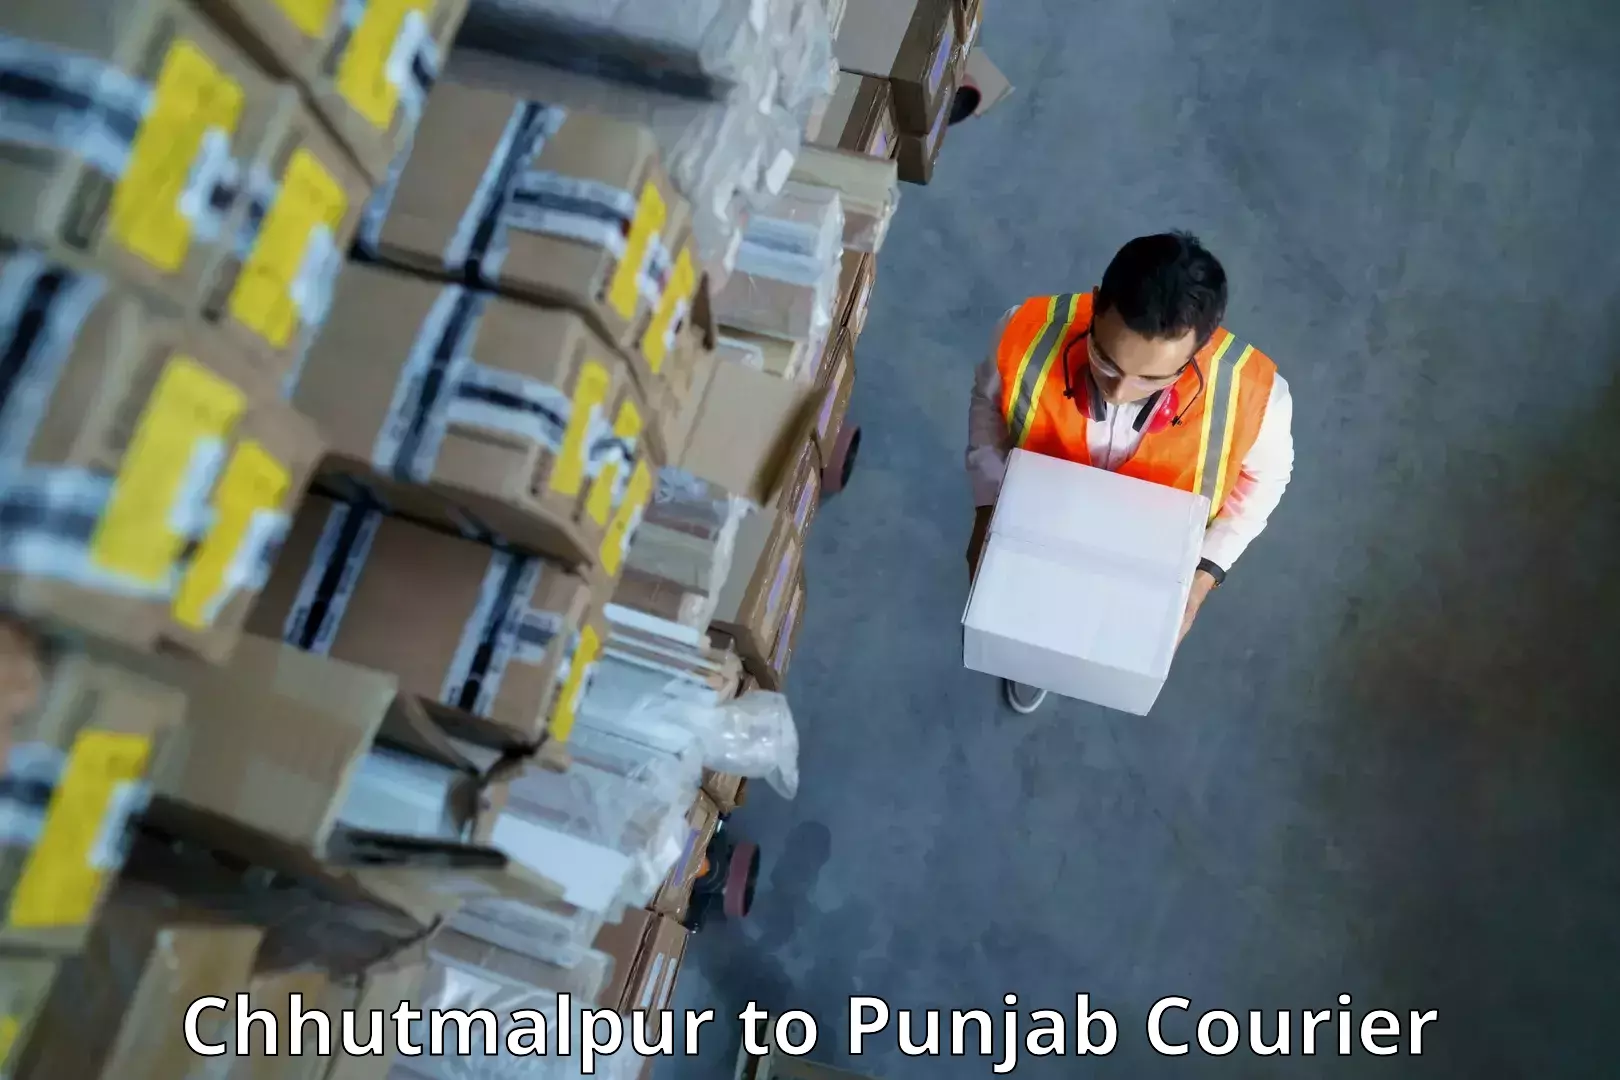 Express logistics providers Chhutmalpur to Mohali